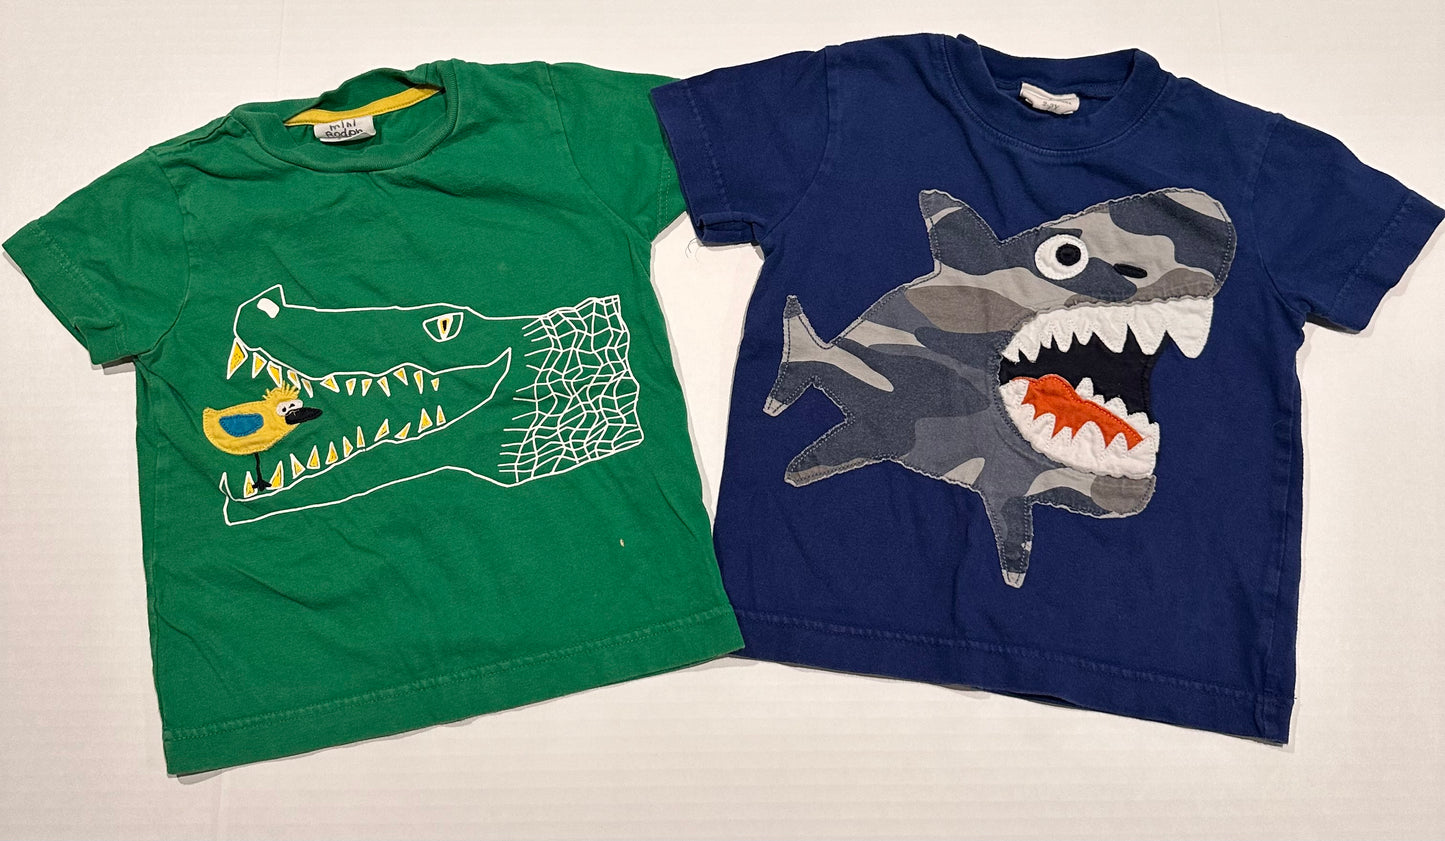 Boys Mini Boden Lot, alligator and shark Shirt Size 2-3